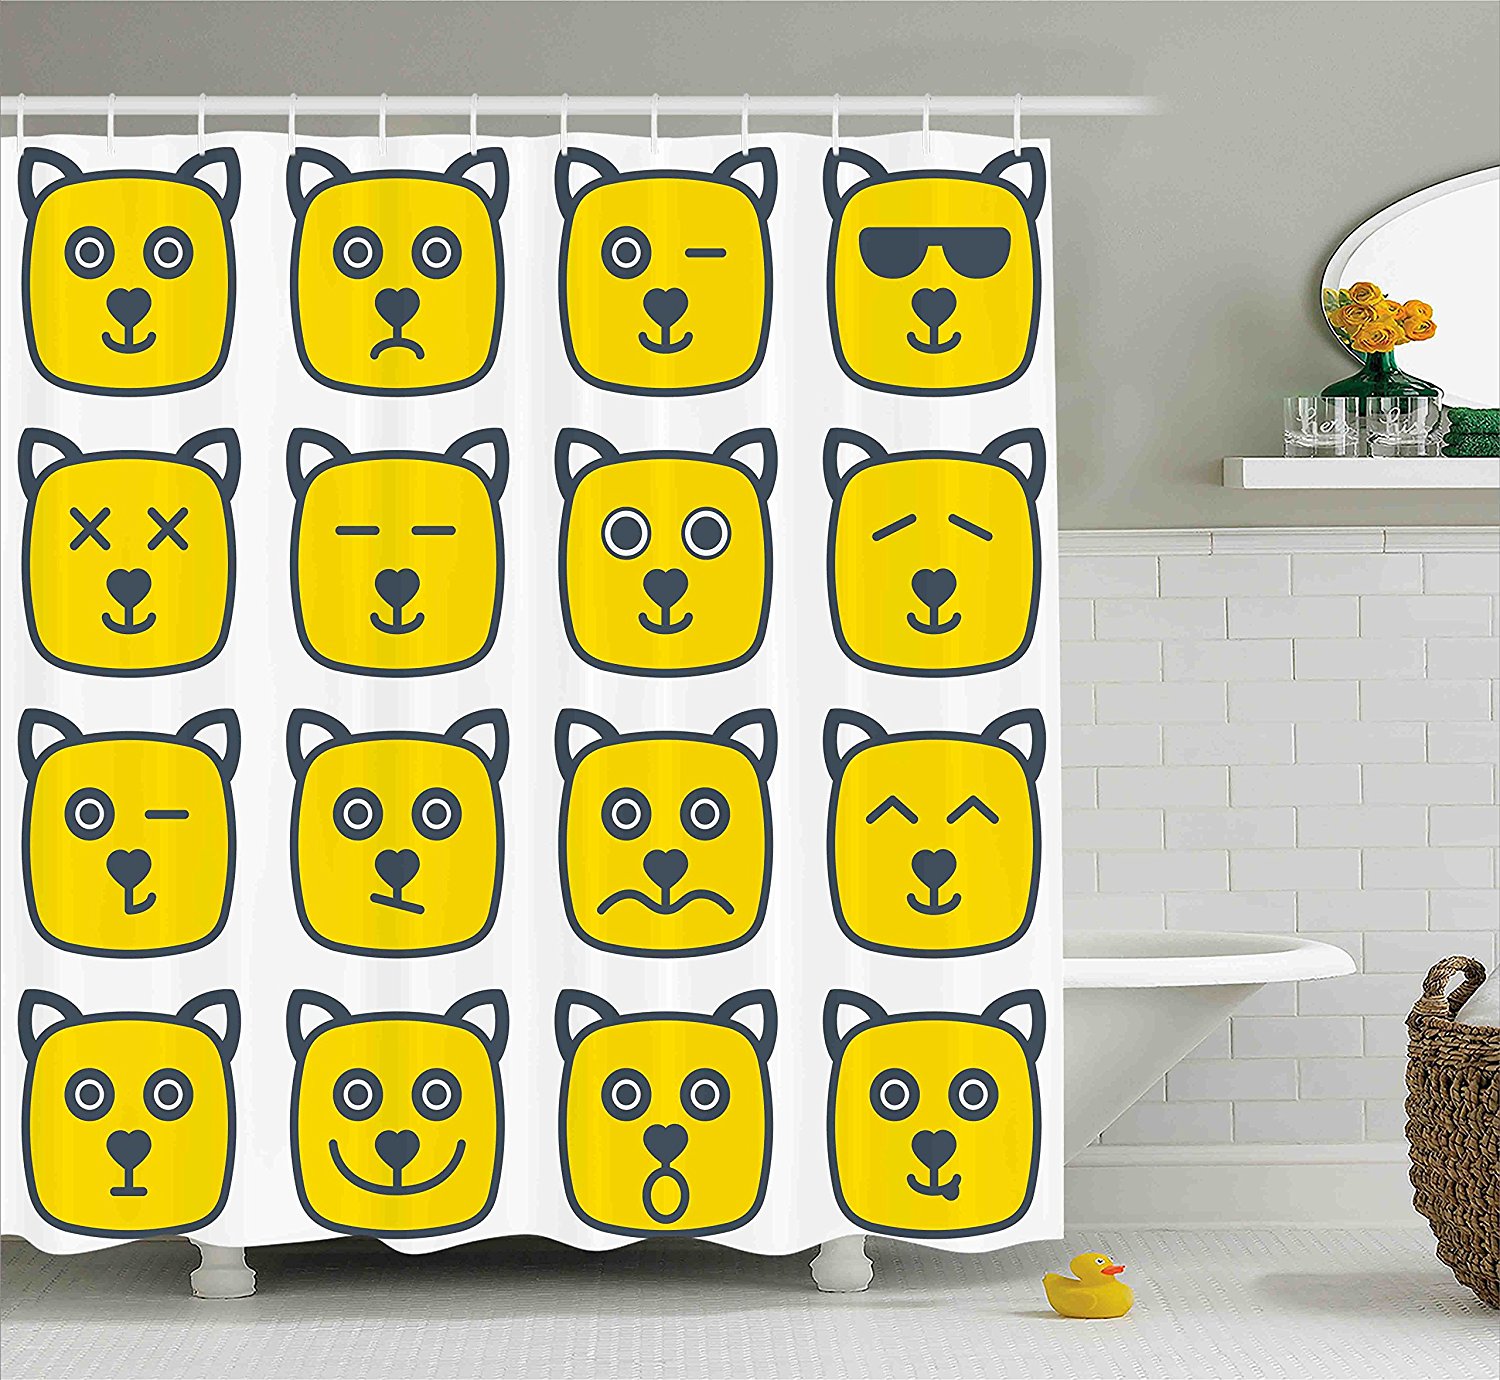 Amazon.com: Ambesonne Emoji Shower Curtain, Cat Dog like Animal ...